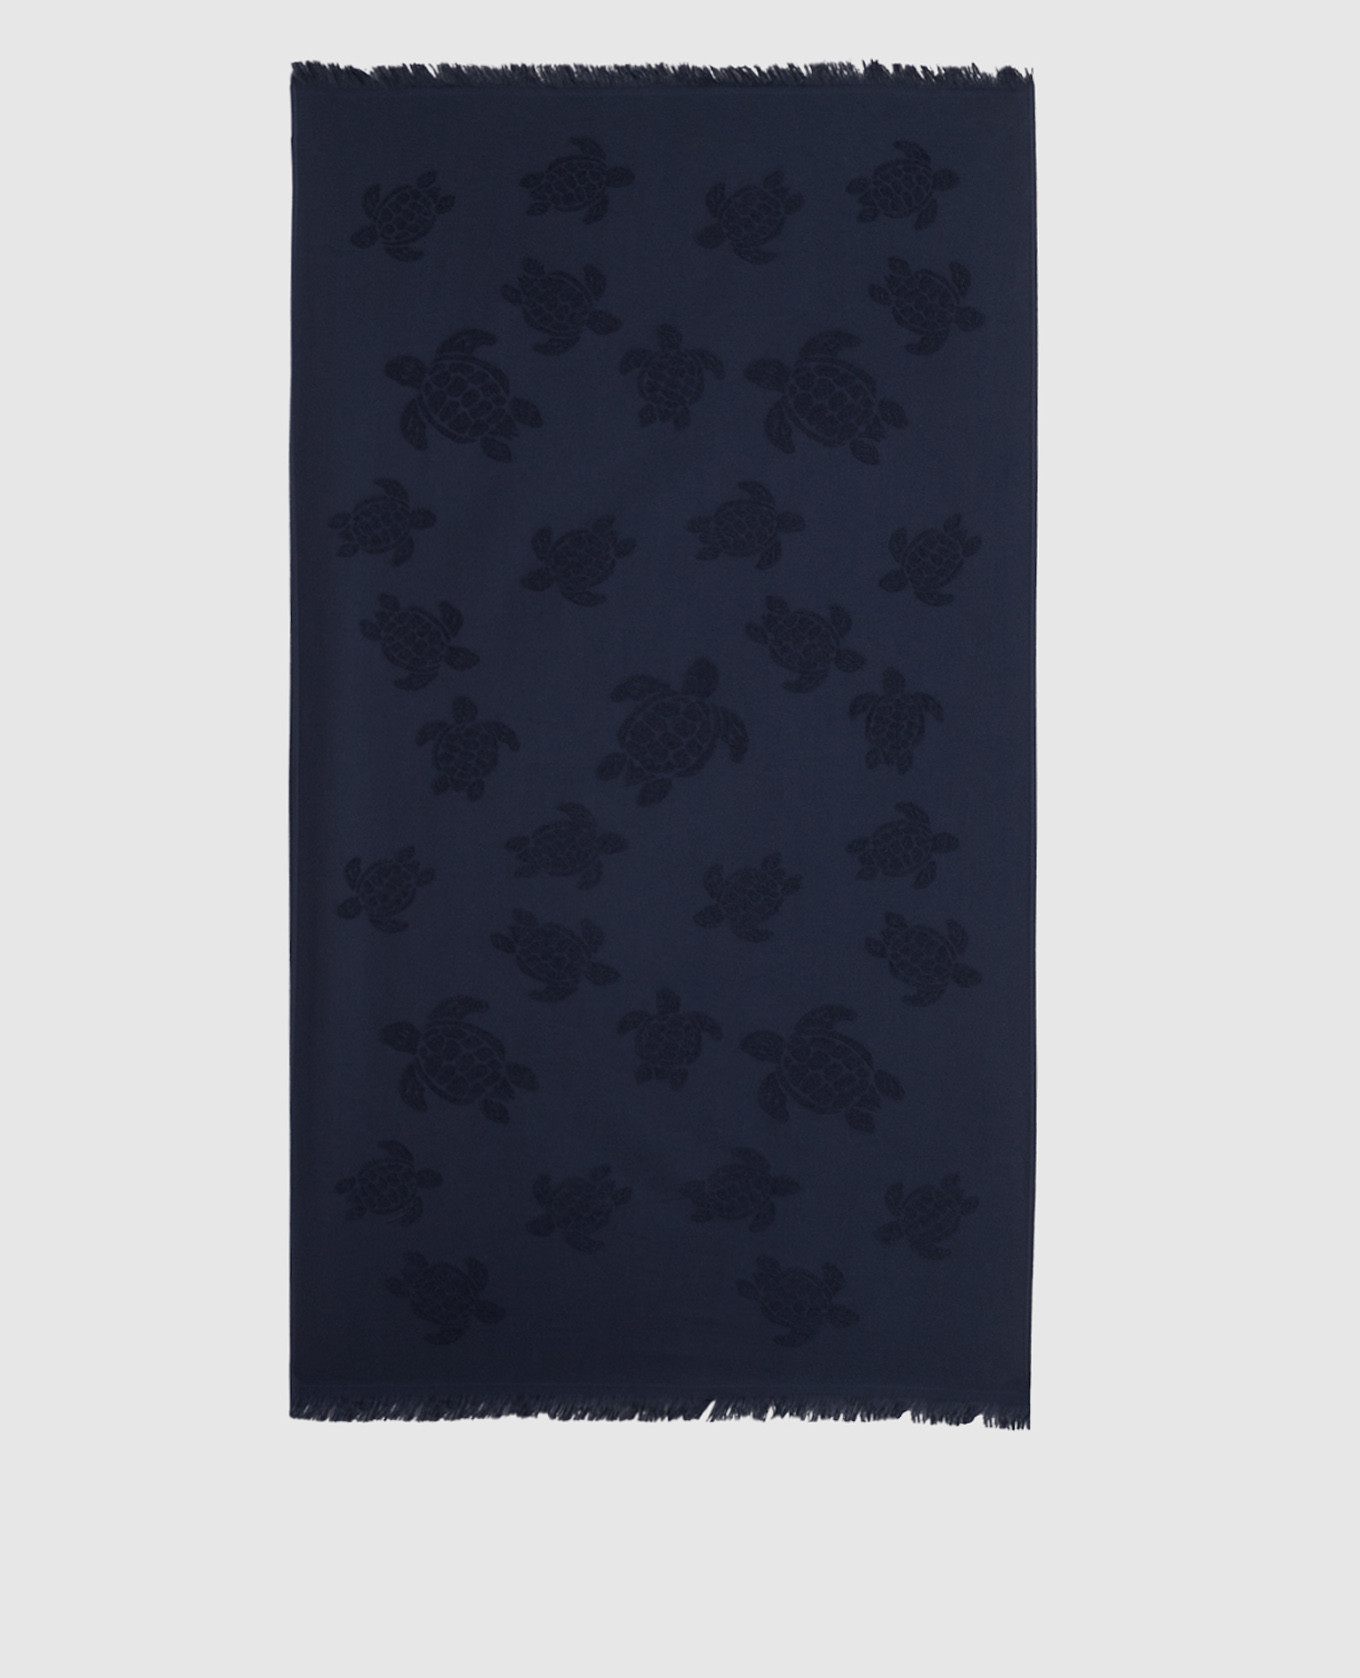 Blue Santah towel in textured pattern